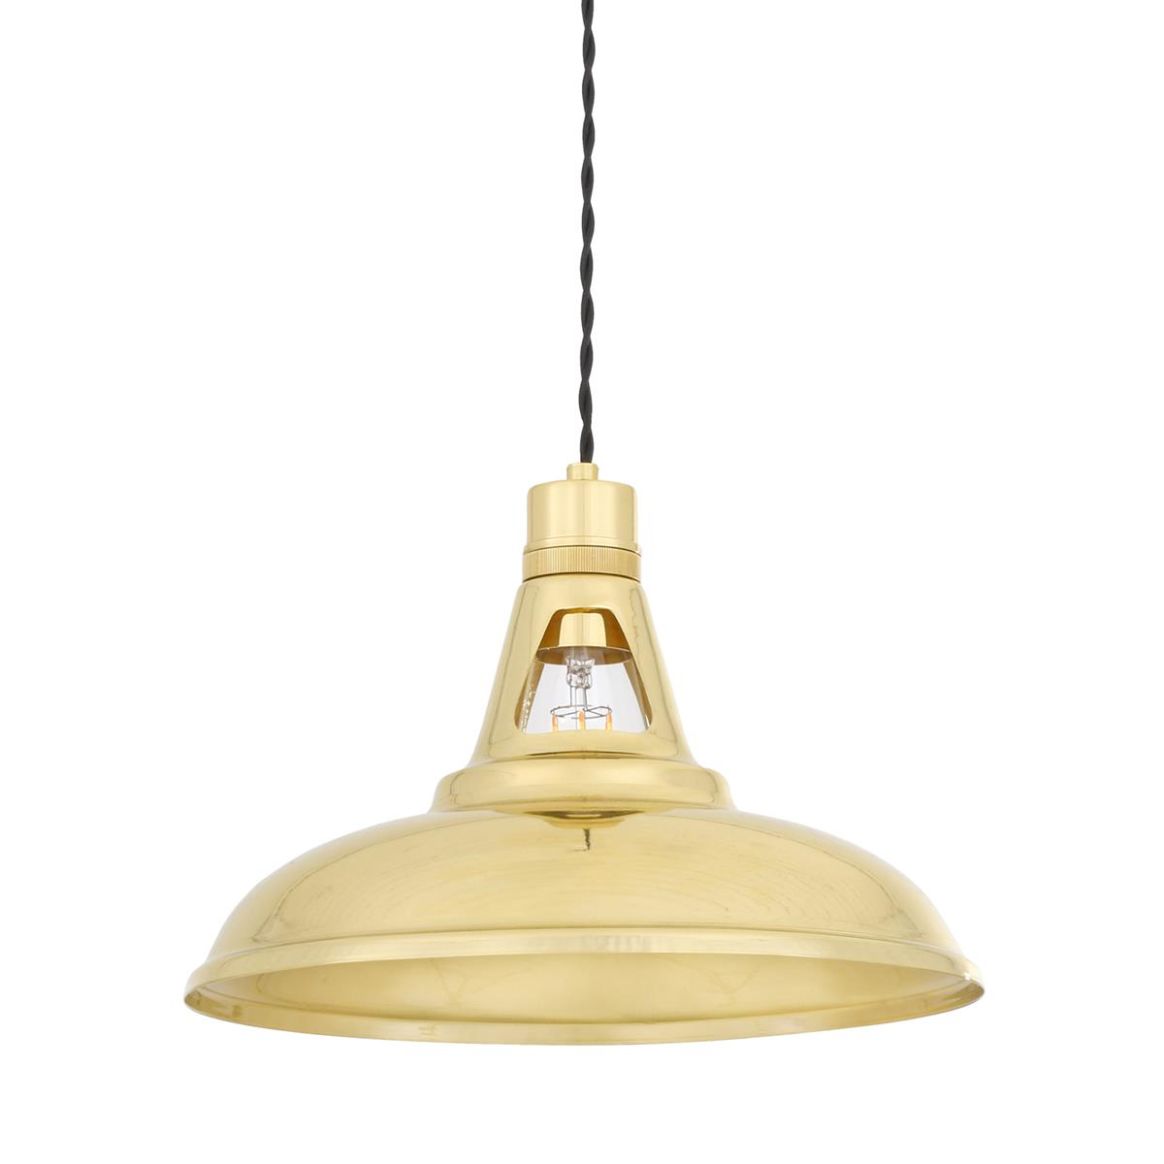 Mullan Lighting Paris Industrial Brass Ceiling Light - Polished Brass